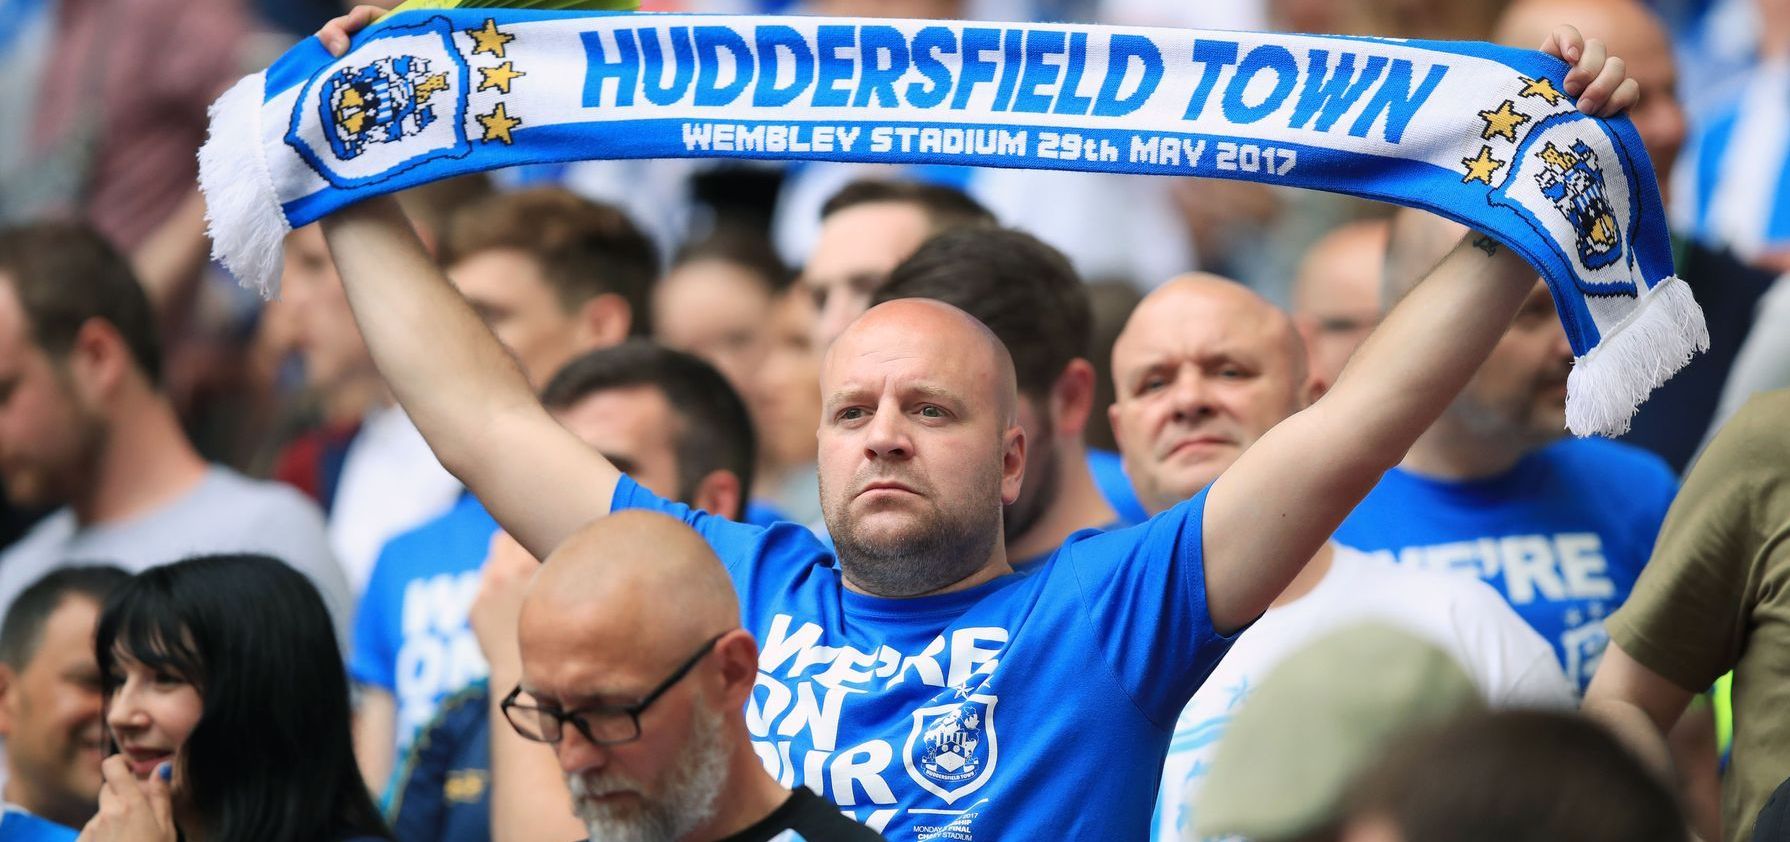 Huddersfield Town A.F.C. fans